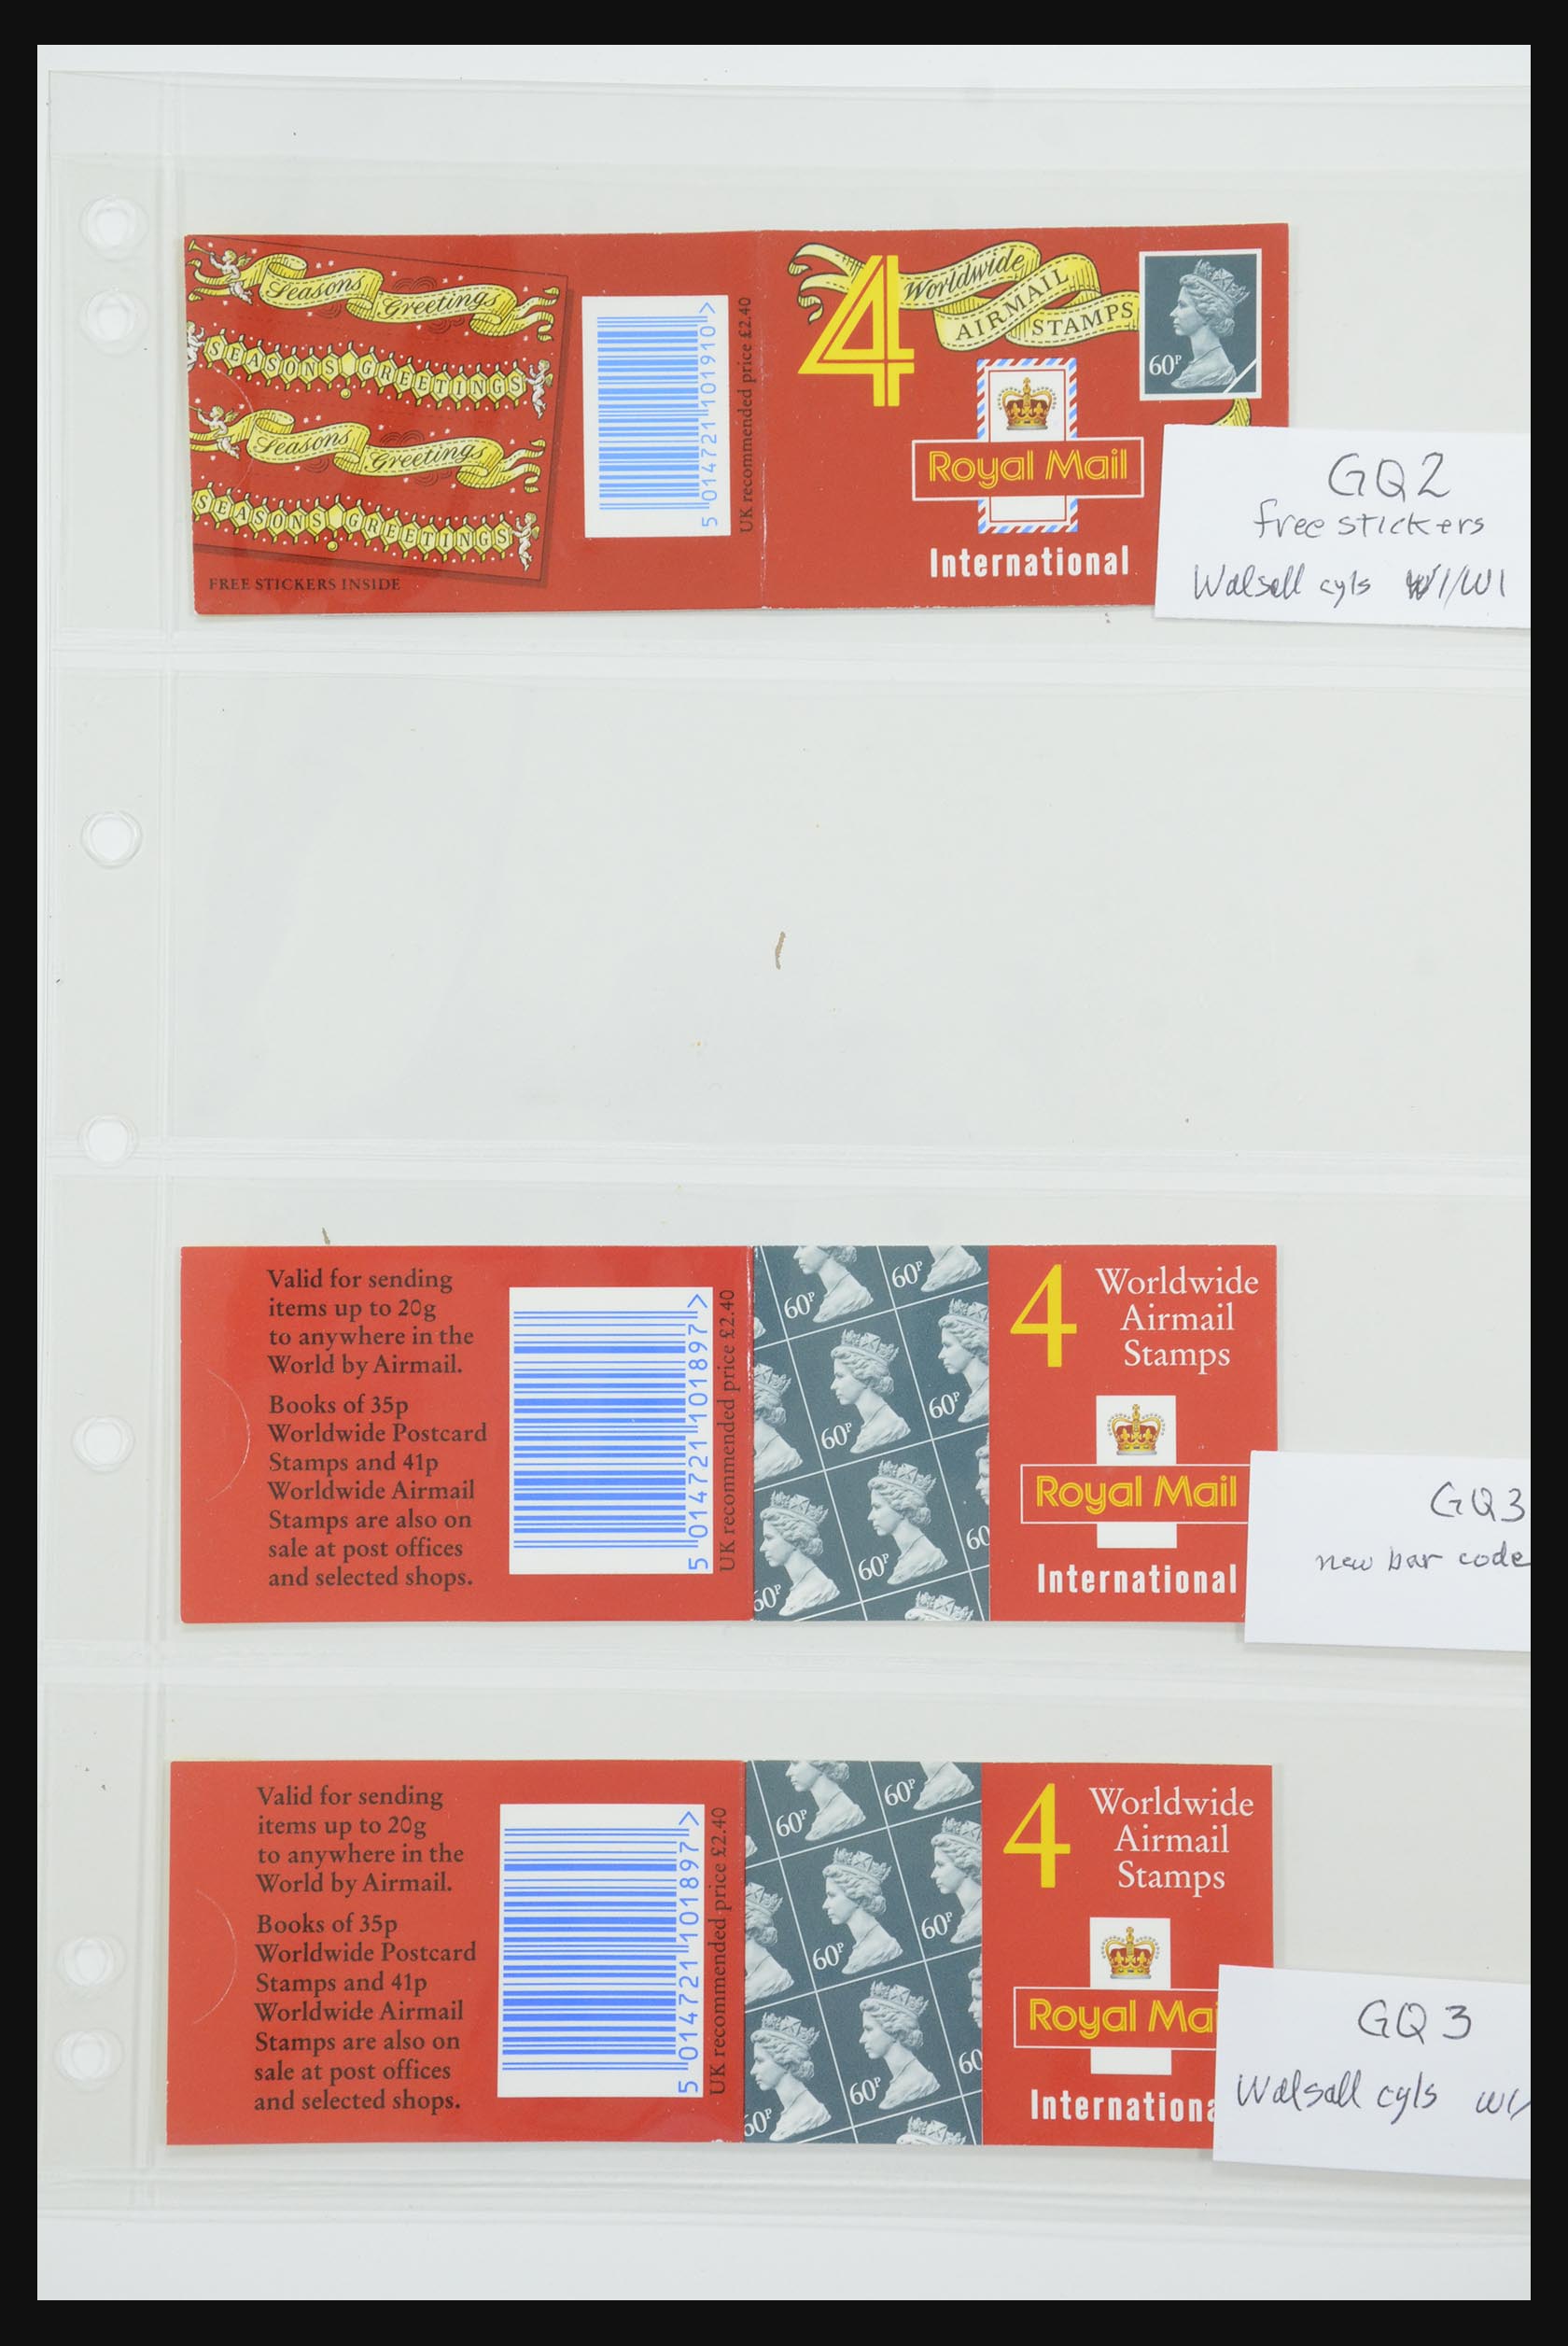 31959 077 - 31959 Great Britain stampbooklets 1987-2016!!